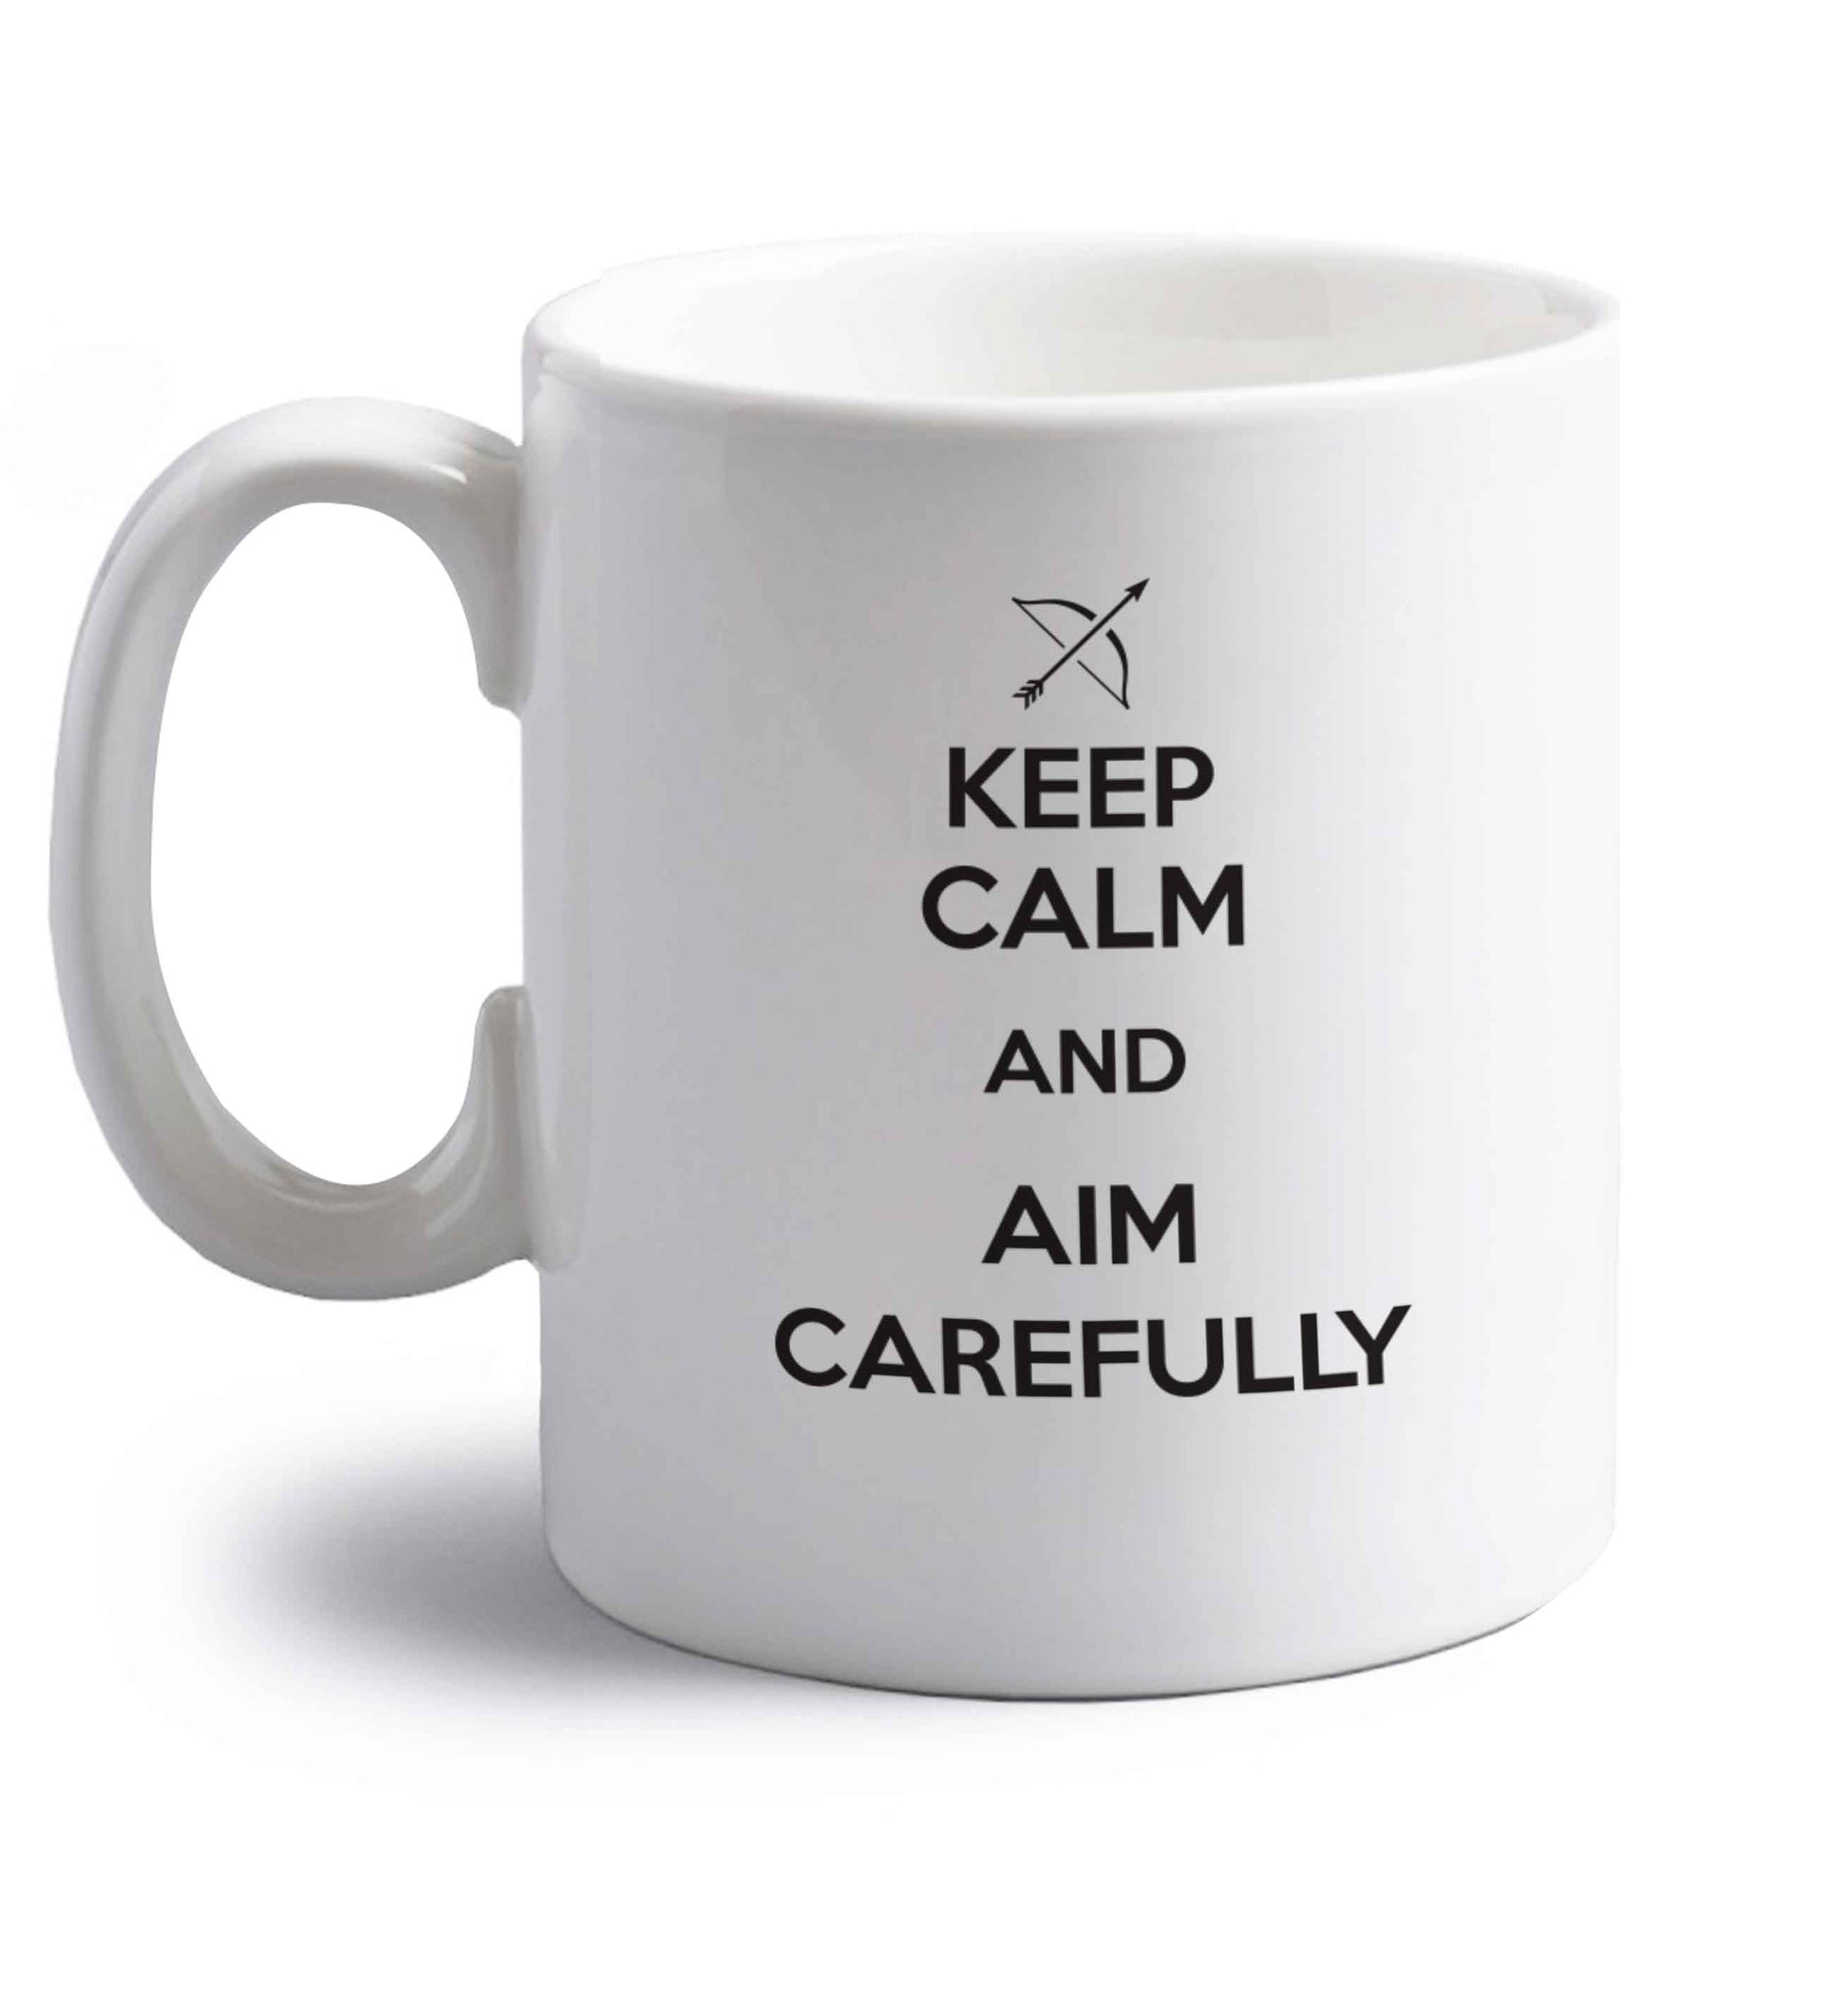 Keep calm and aim carefully right handed white ceramic mug 